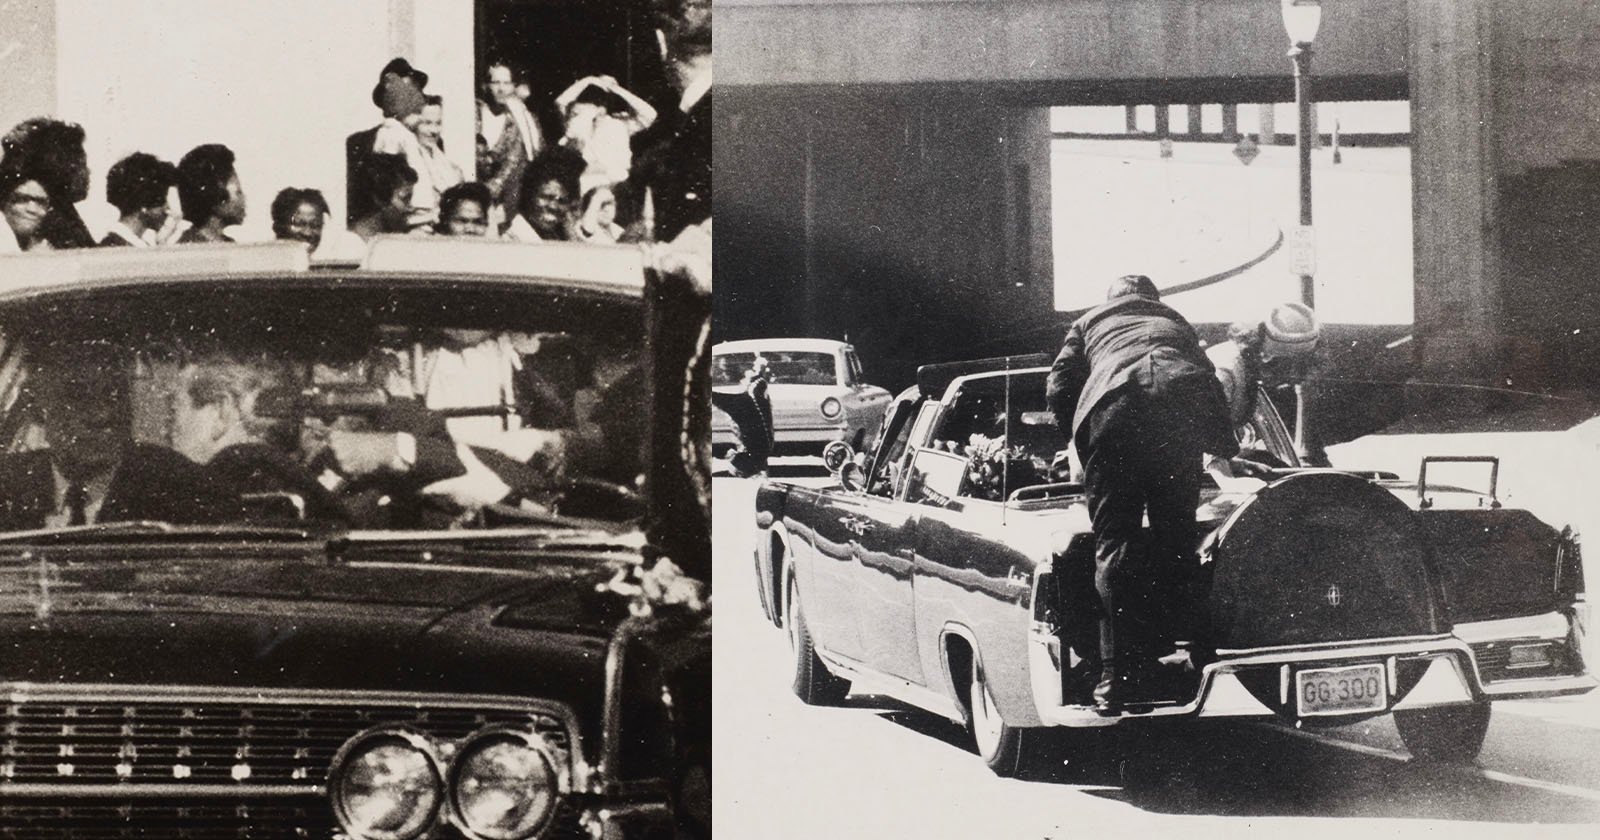  rare valuable jfk assassination photos found garage 